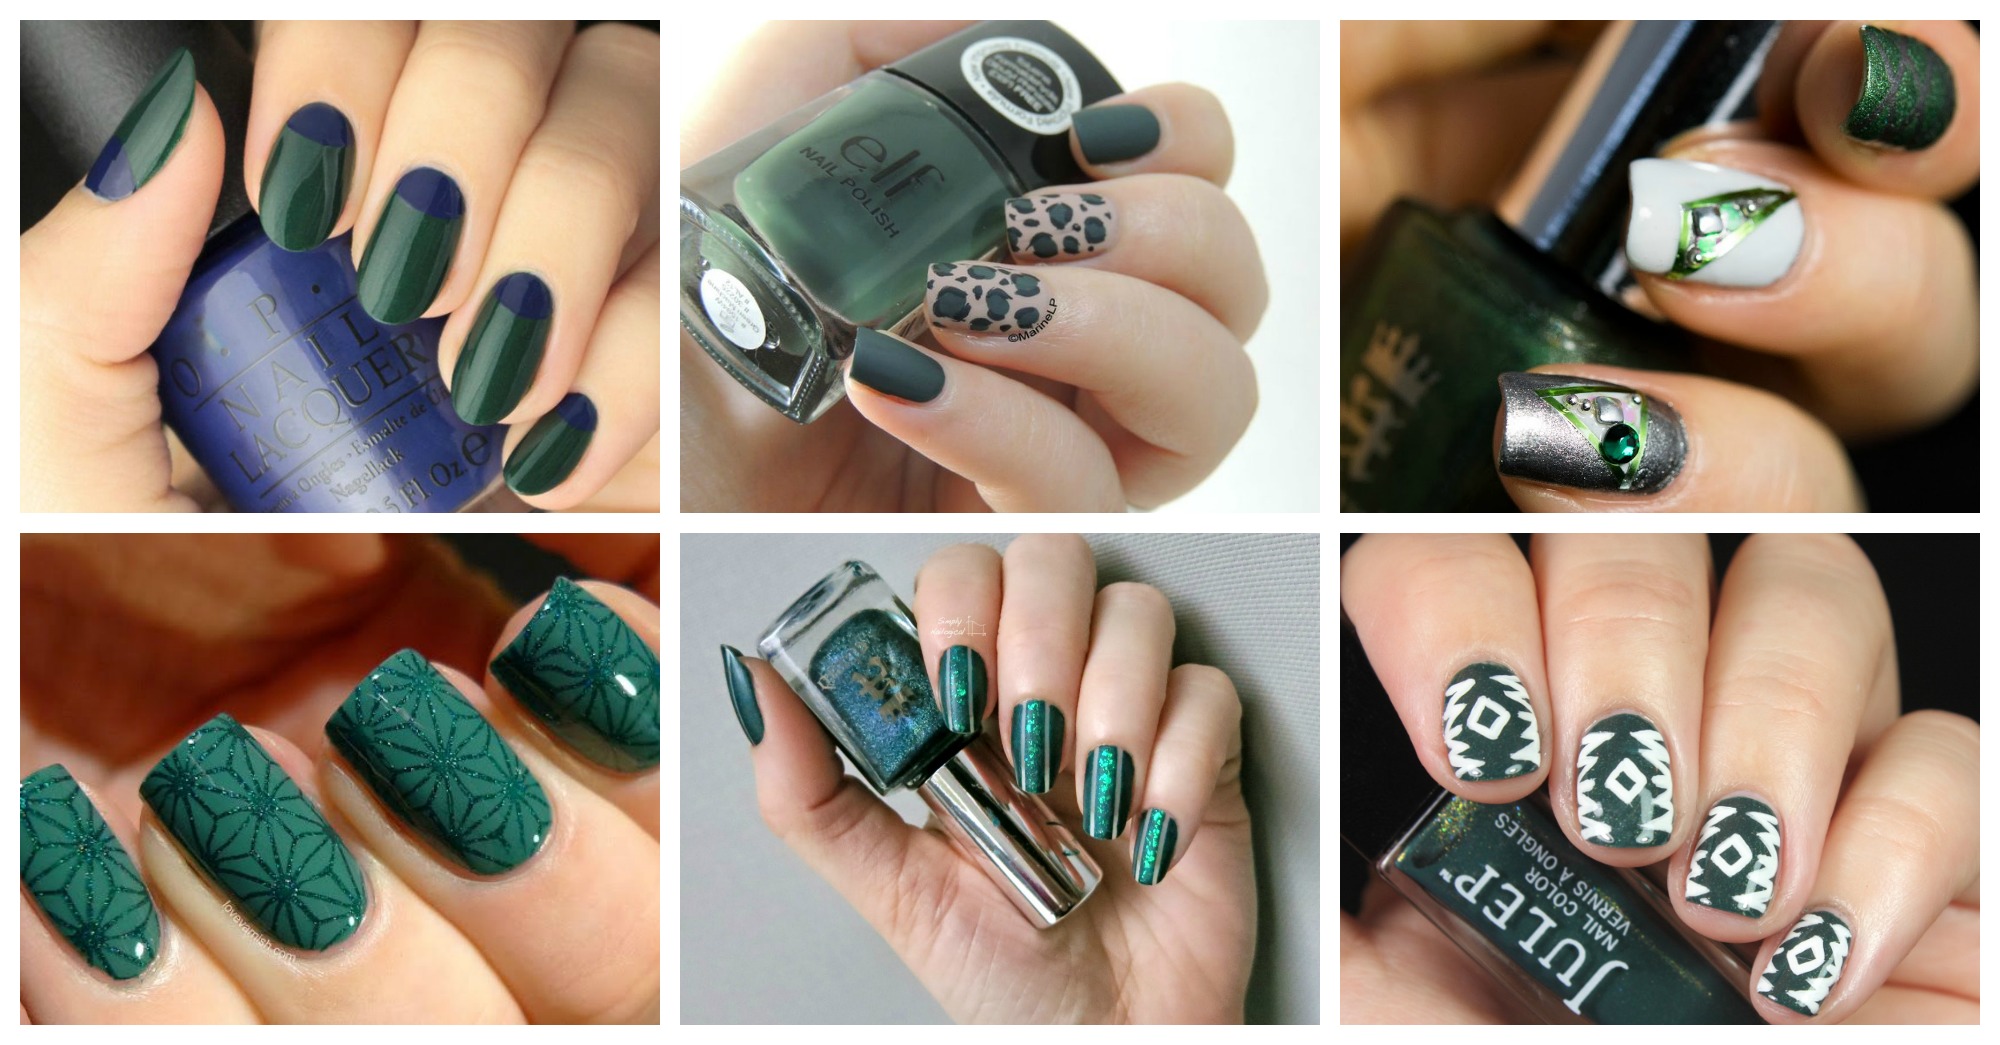 15 Emerald Green Nail Designs You Can Copy - fashionsy.com